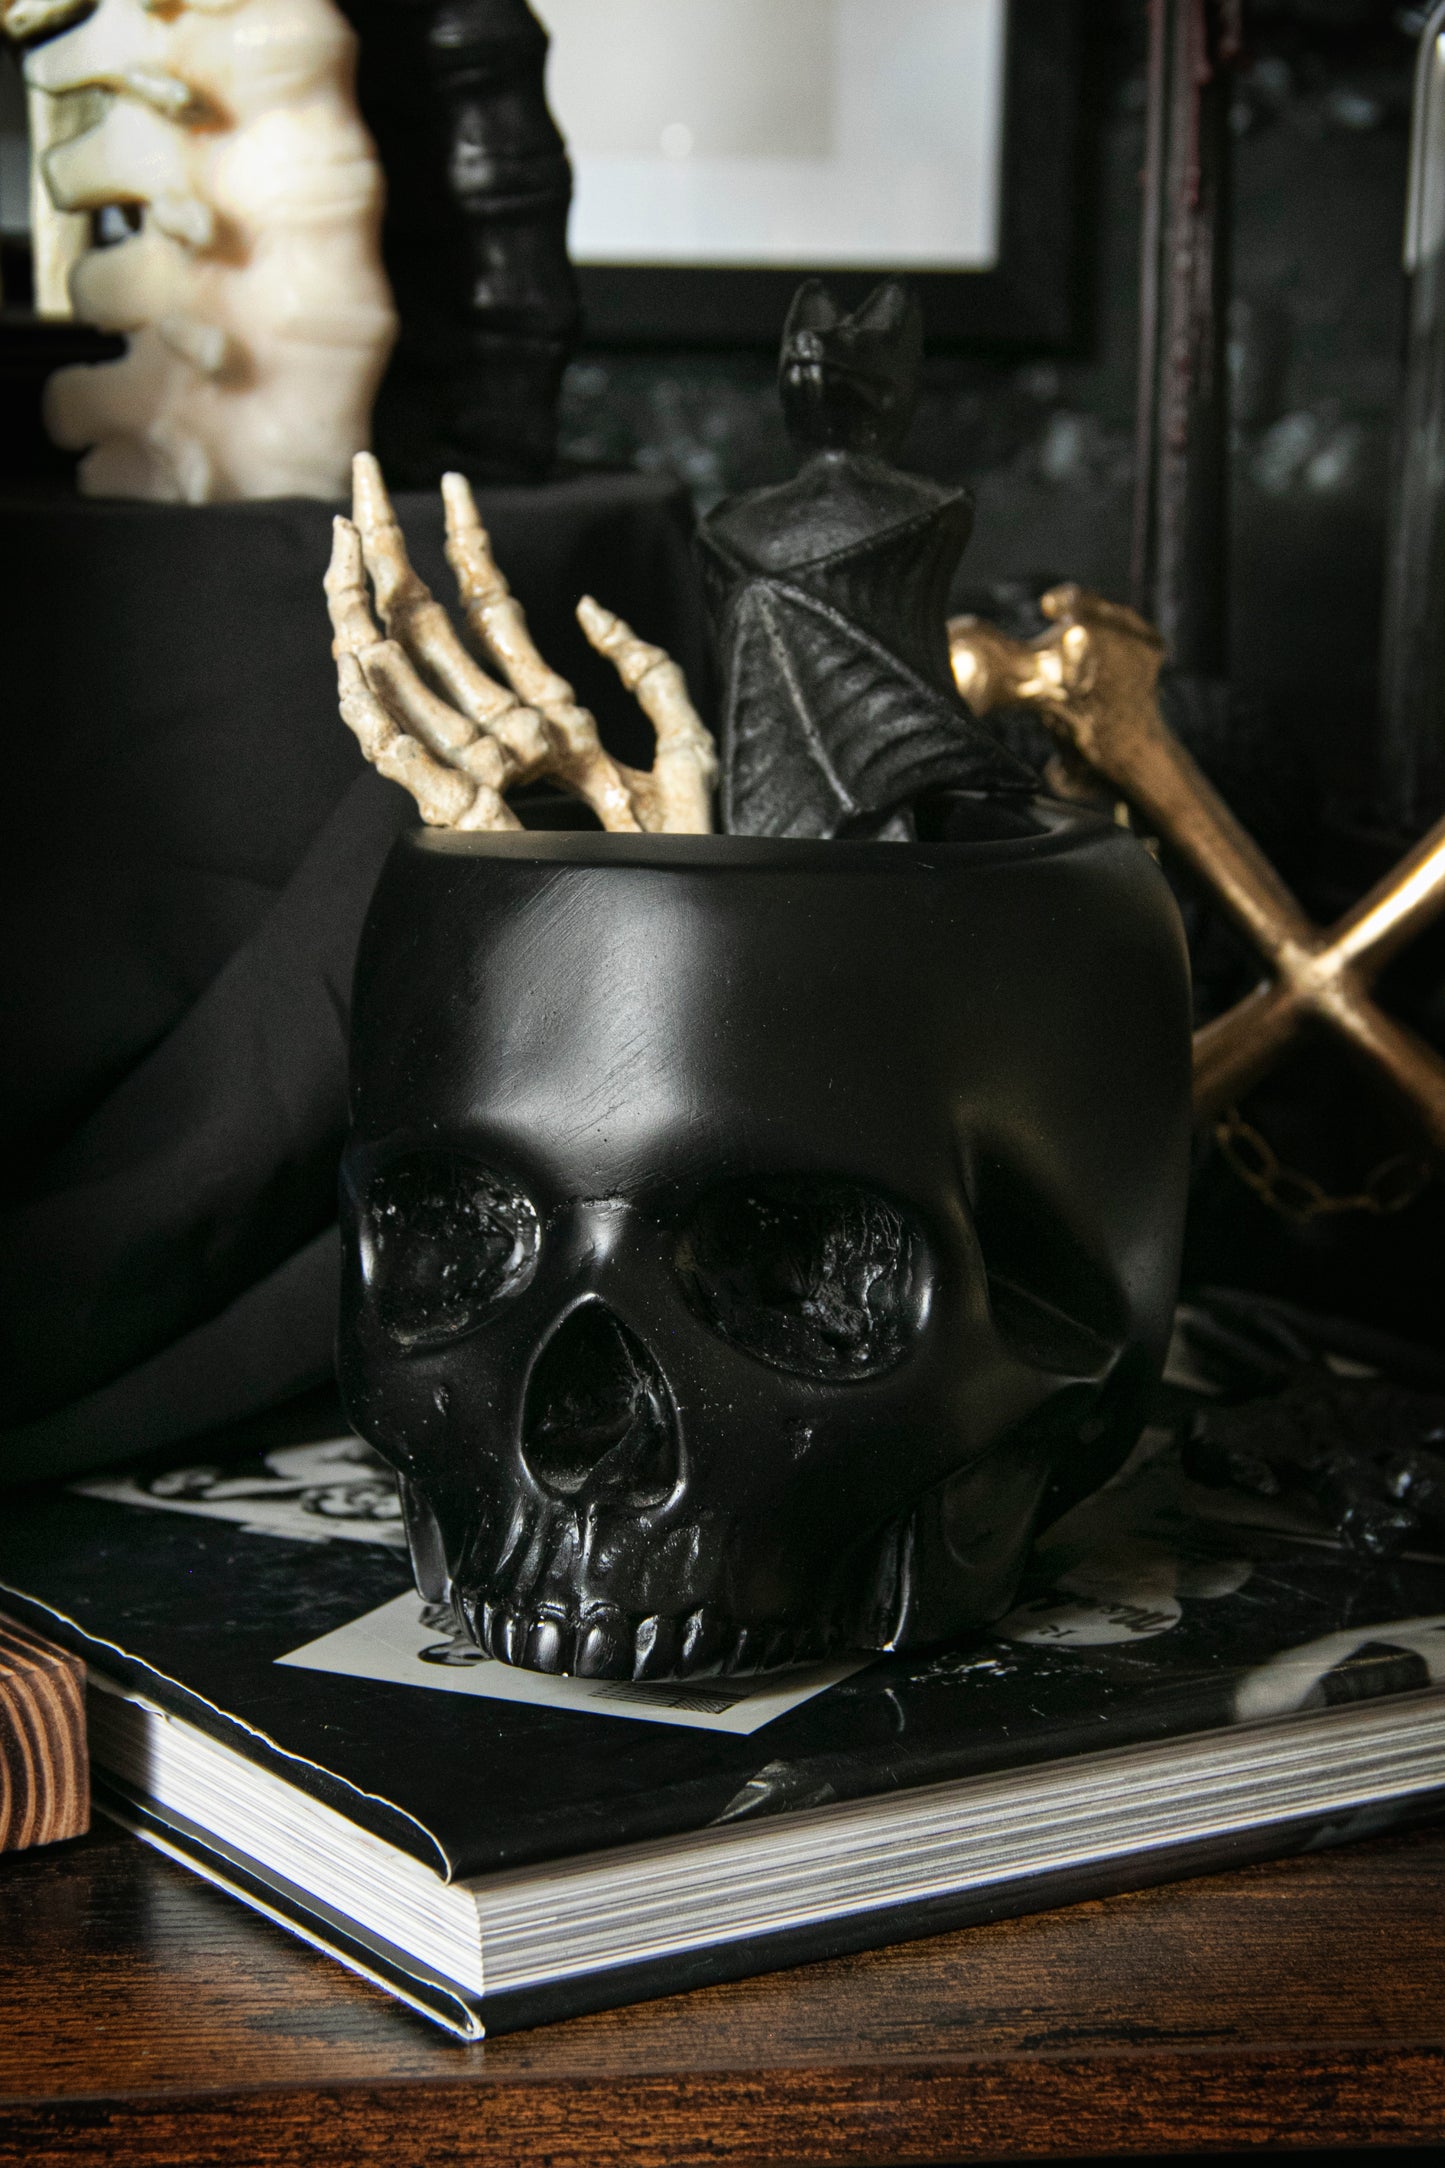 Jawless Skull Pot in Black - The Blackened Teeth